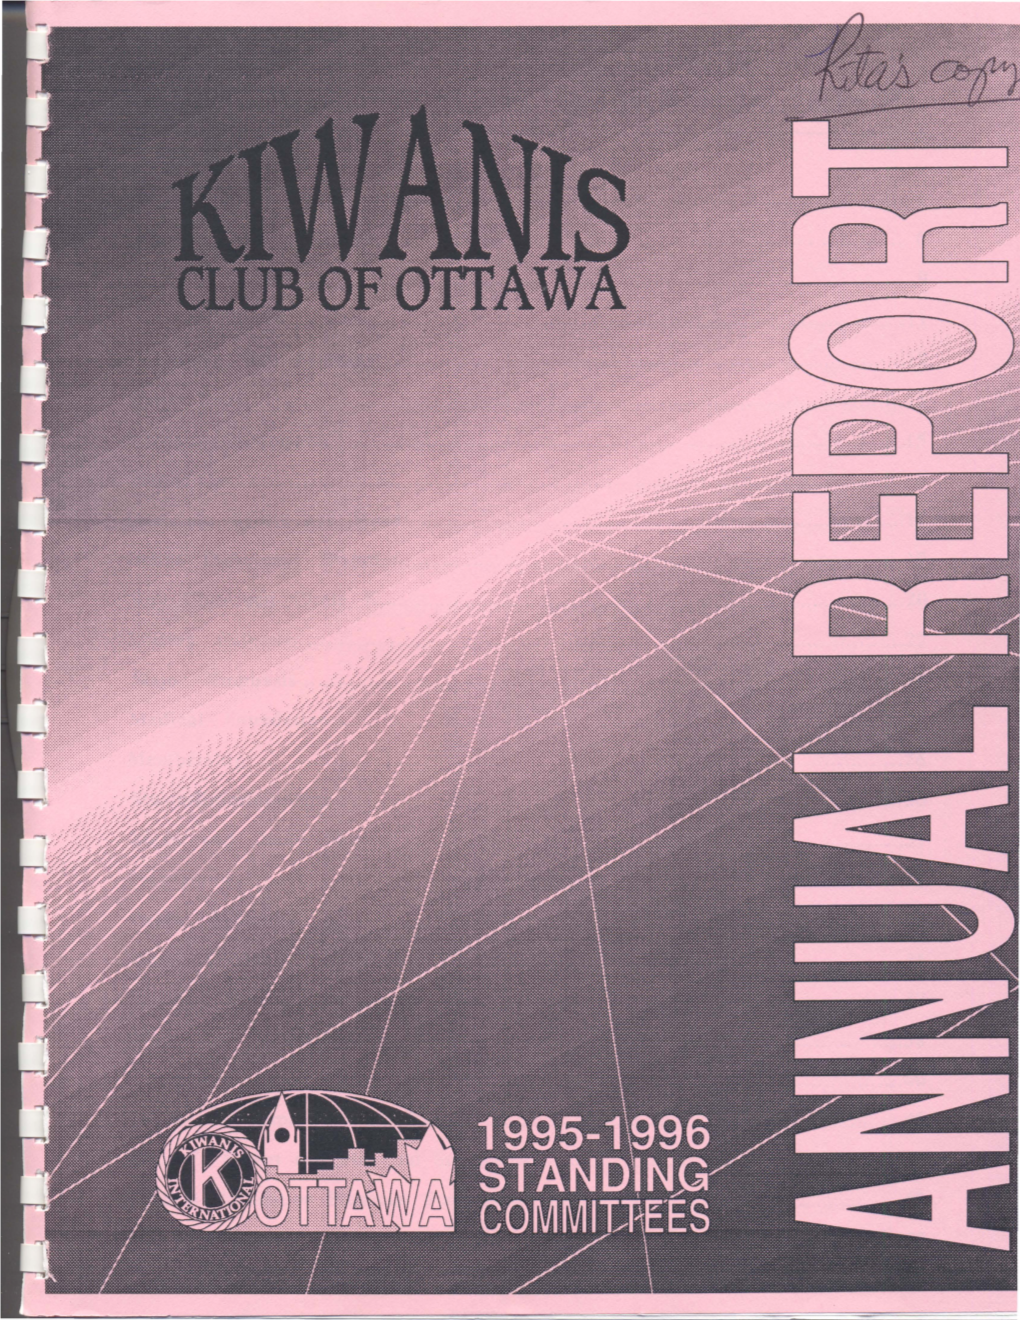 1995-96 Annual Report